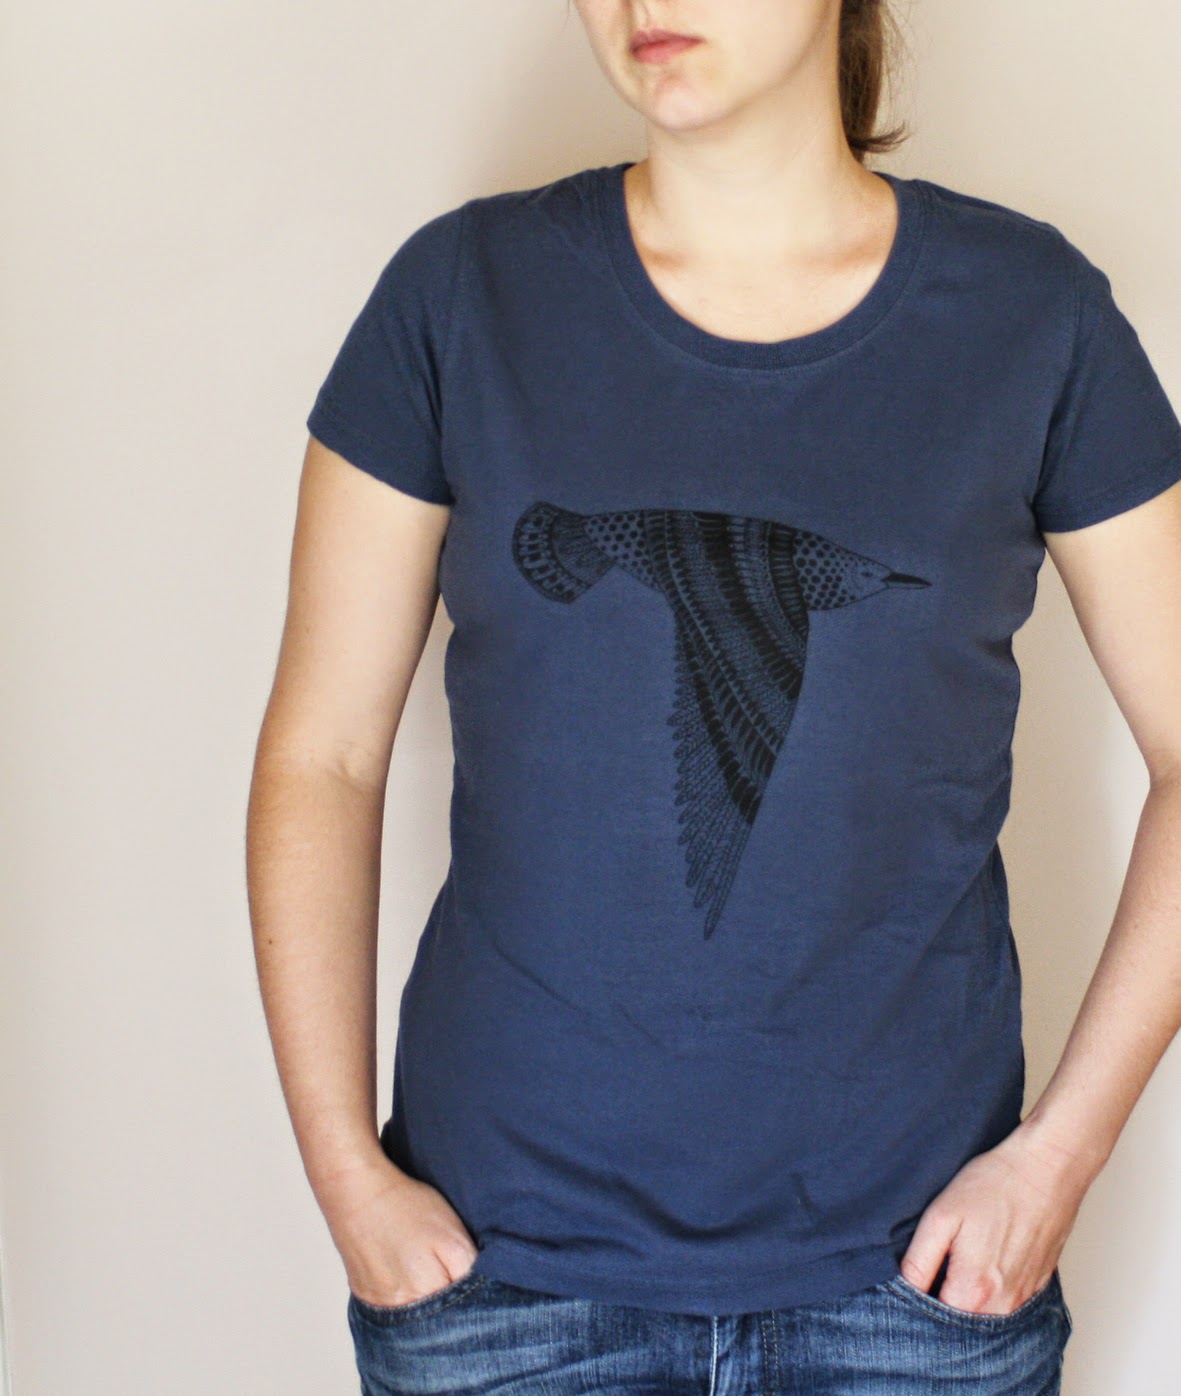 https://www.etsy.com/listing/154883113/seabird-womens-screenprinted-tshirt?ref=related-4